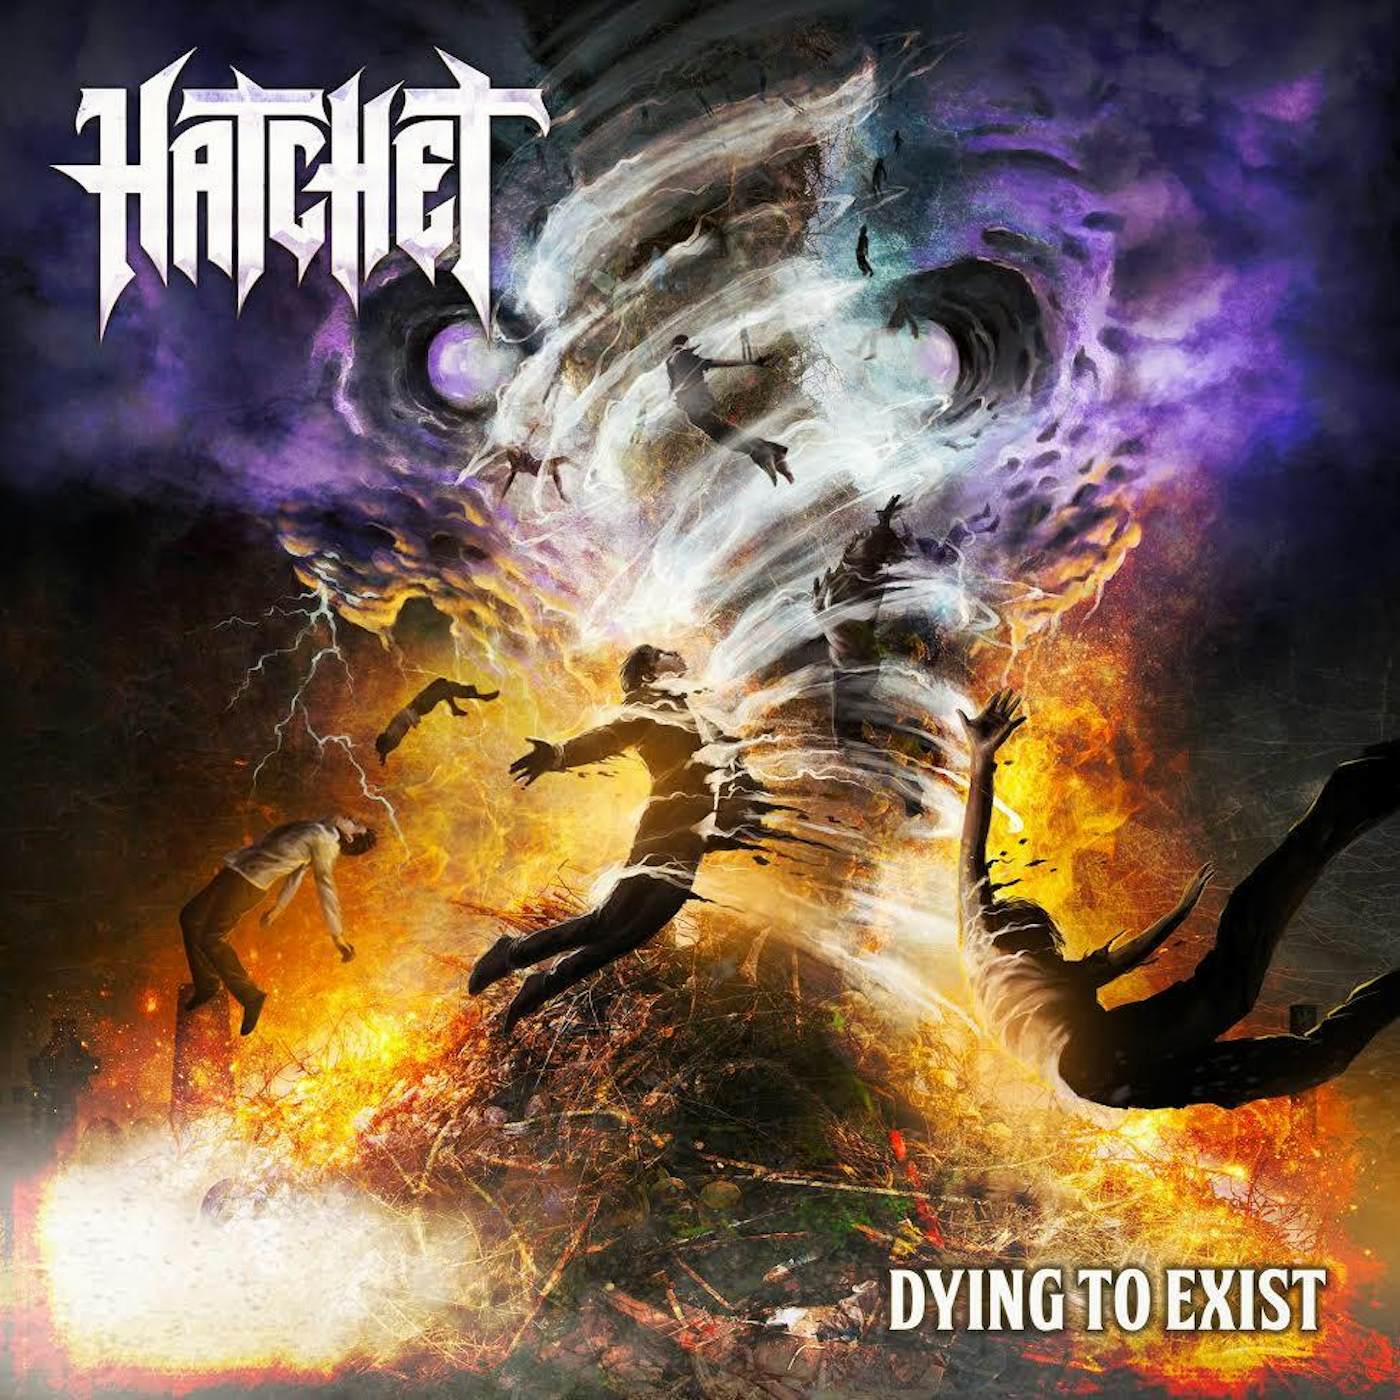 Hatchet Dying to Exist Vinyl Record